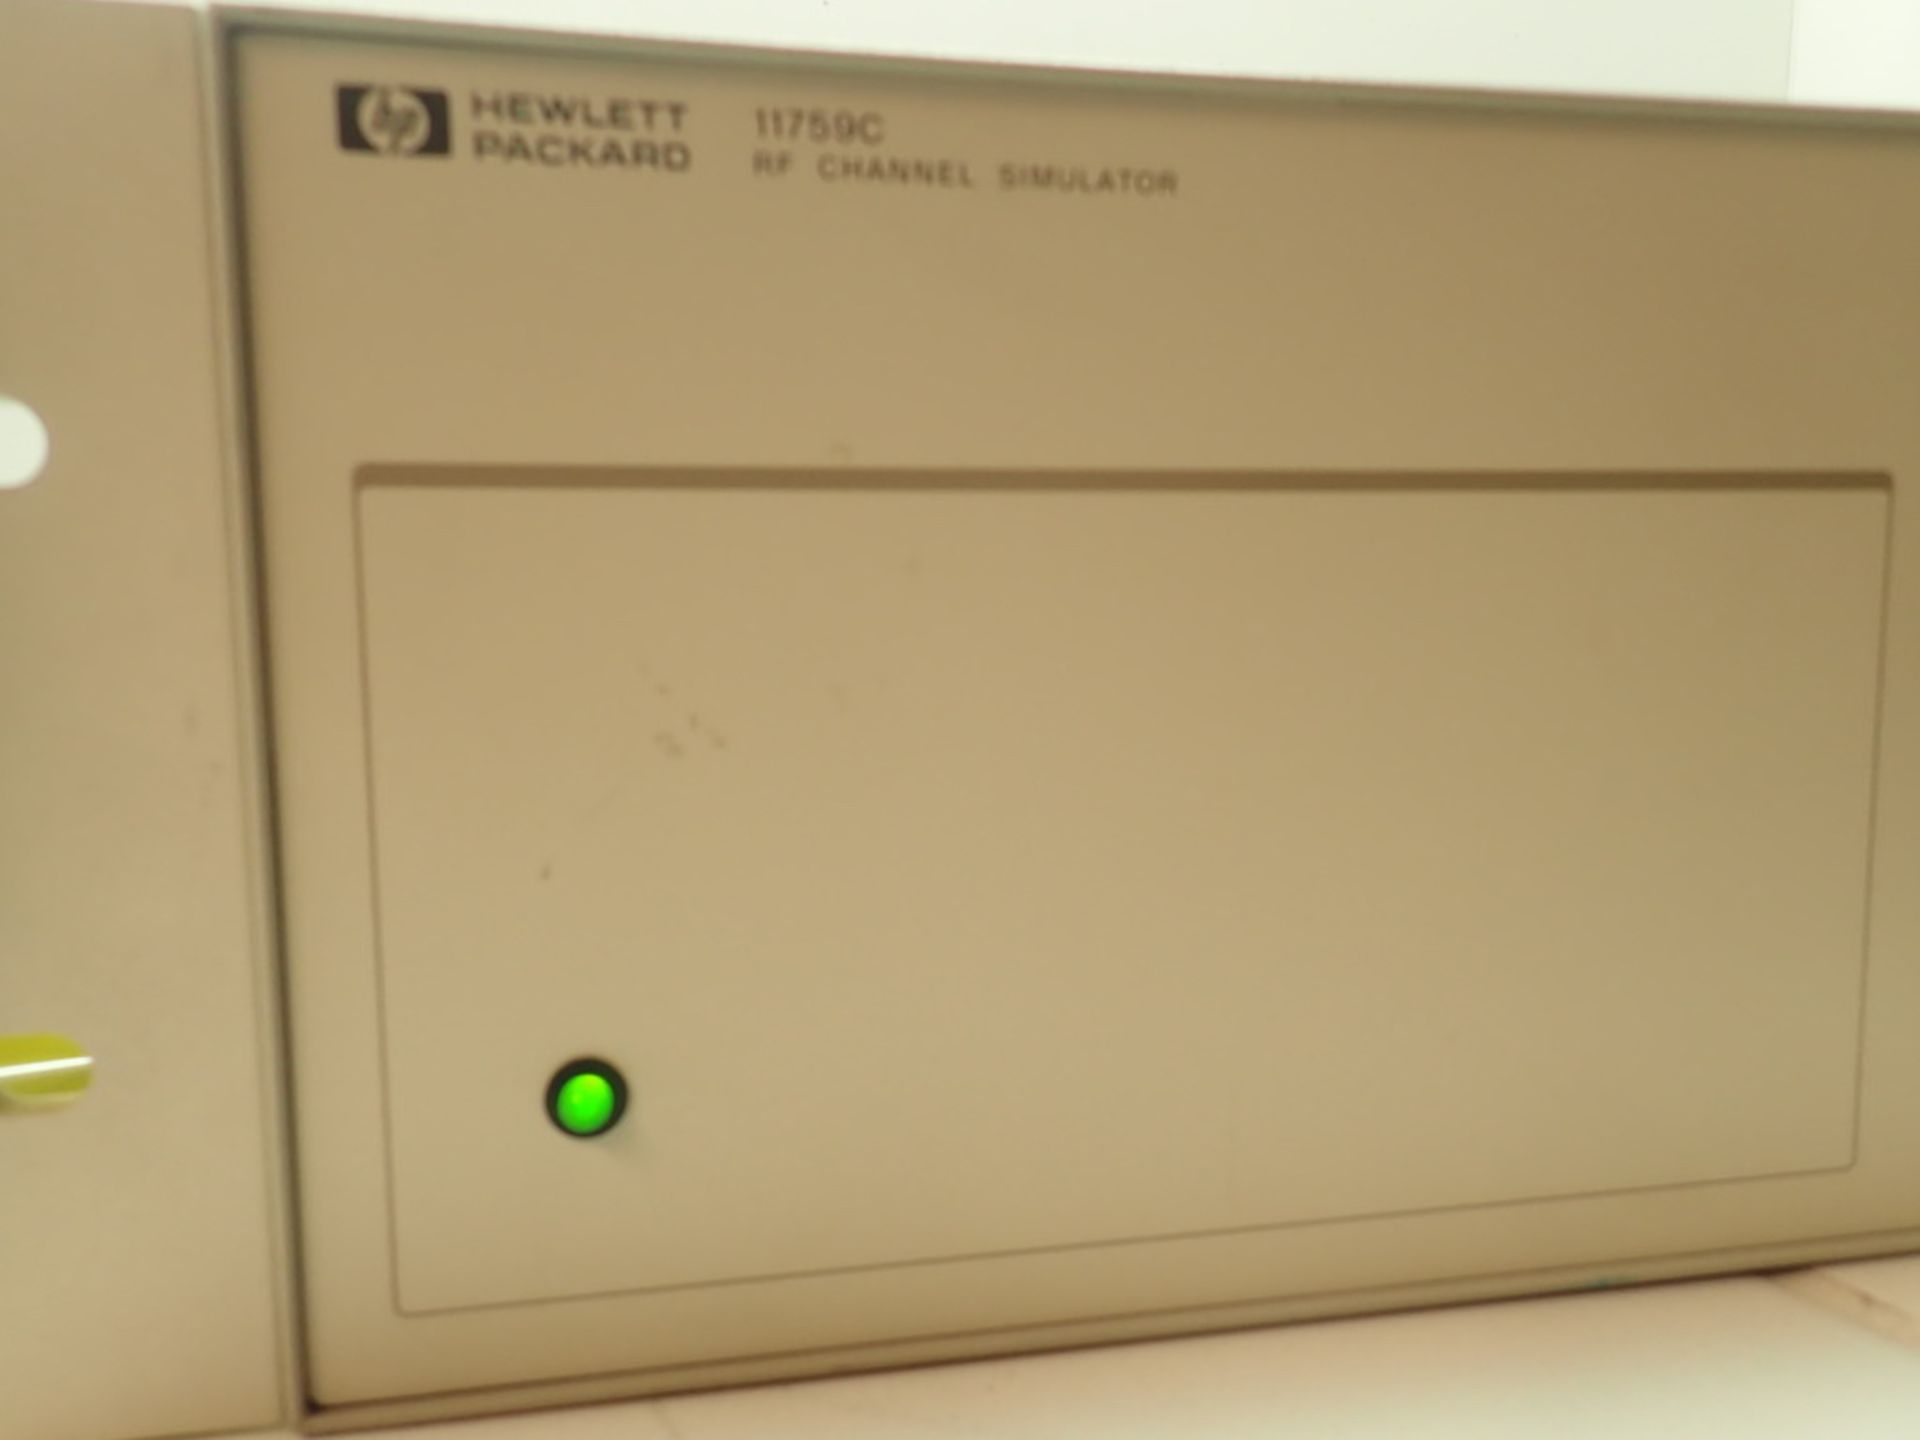 Hewlett Packard 11759C Channel Simulator - Image 2 of 3